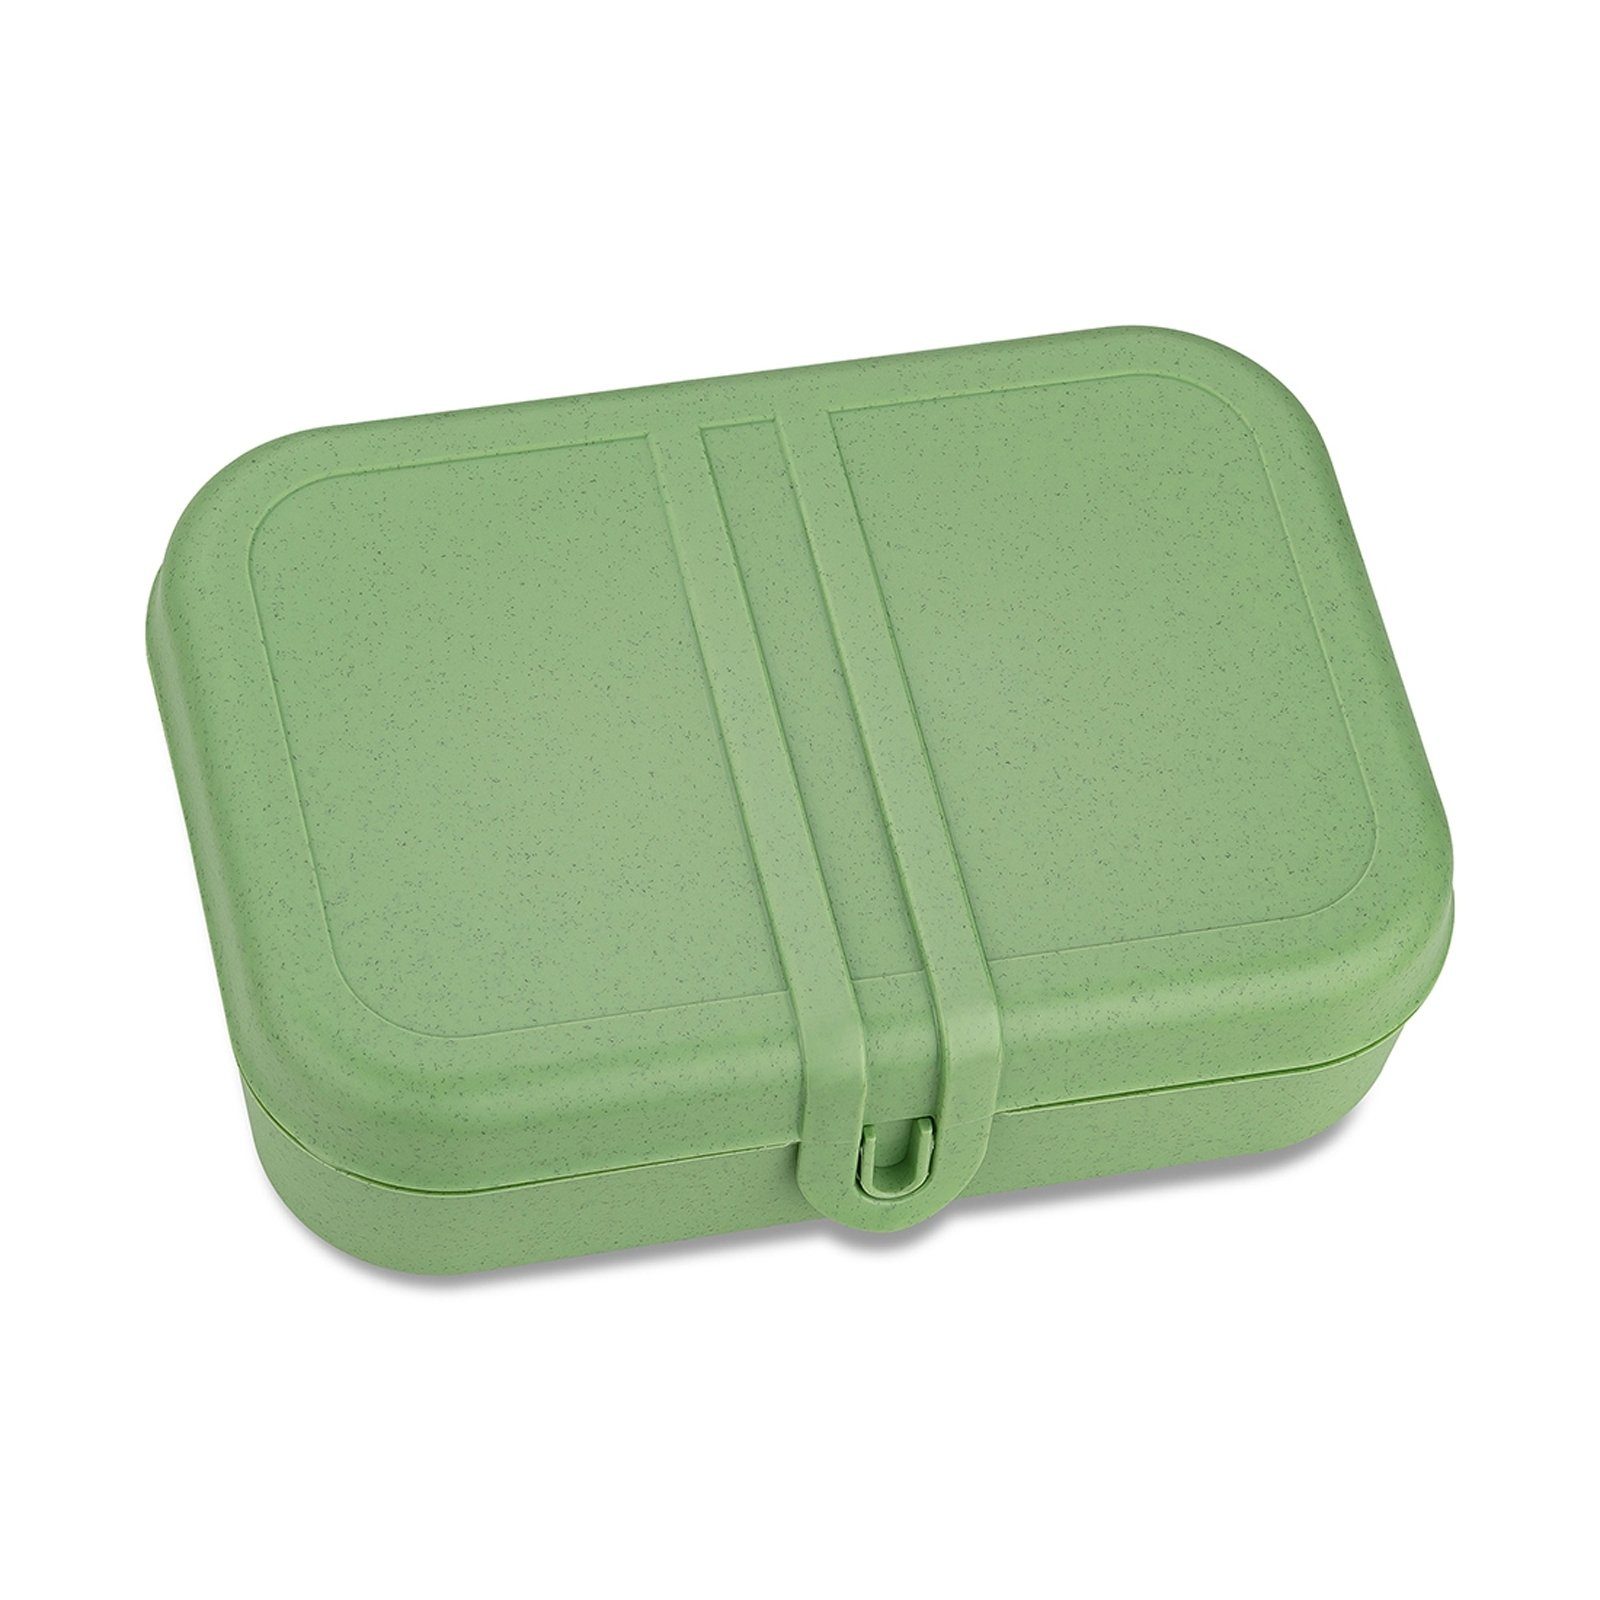 Lunchbox 1-tlg), Lunchbox KOZIOL mit Grün Kunststoff Brotdose Trennsteg PASCAL Kunststoff, L, (Stück,